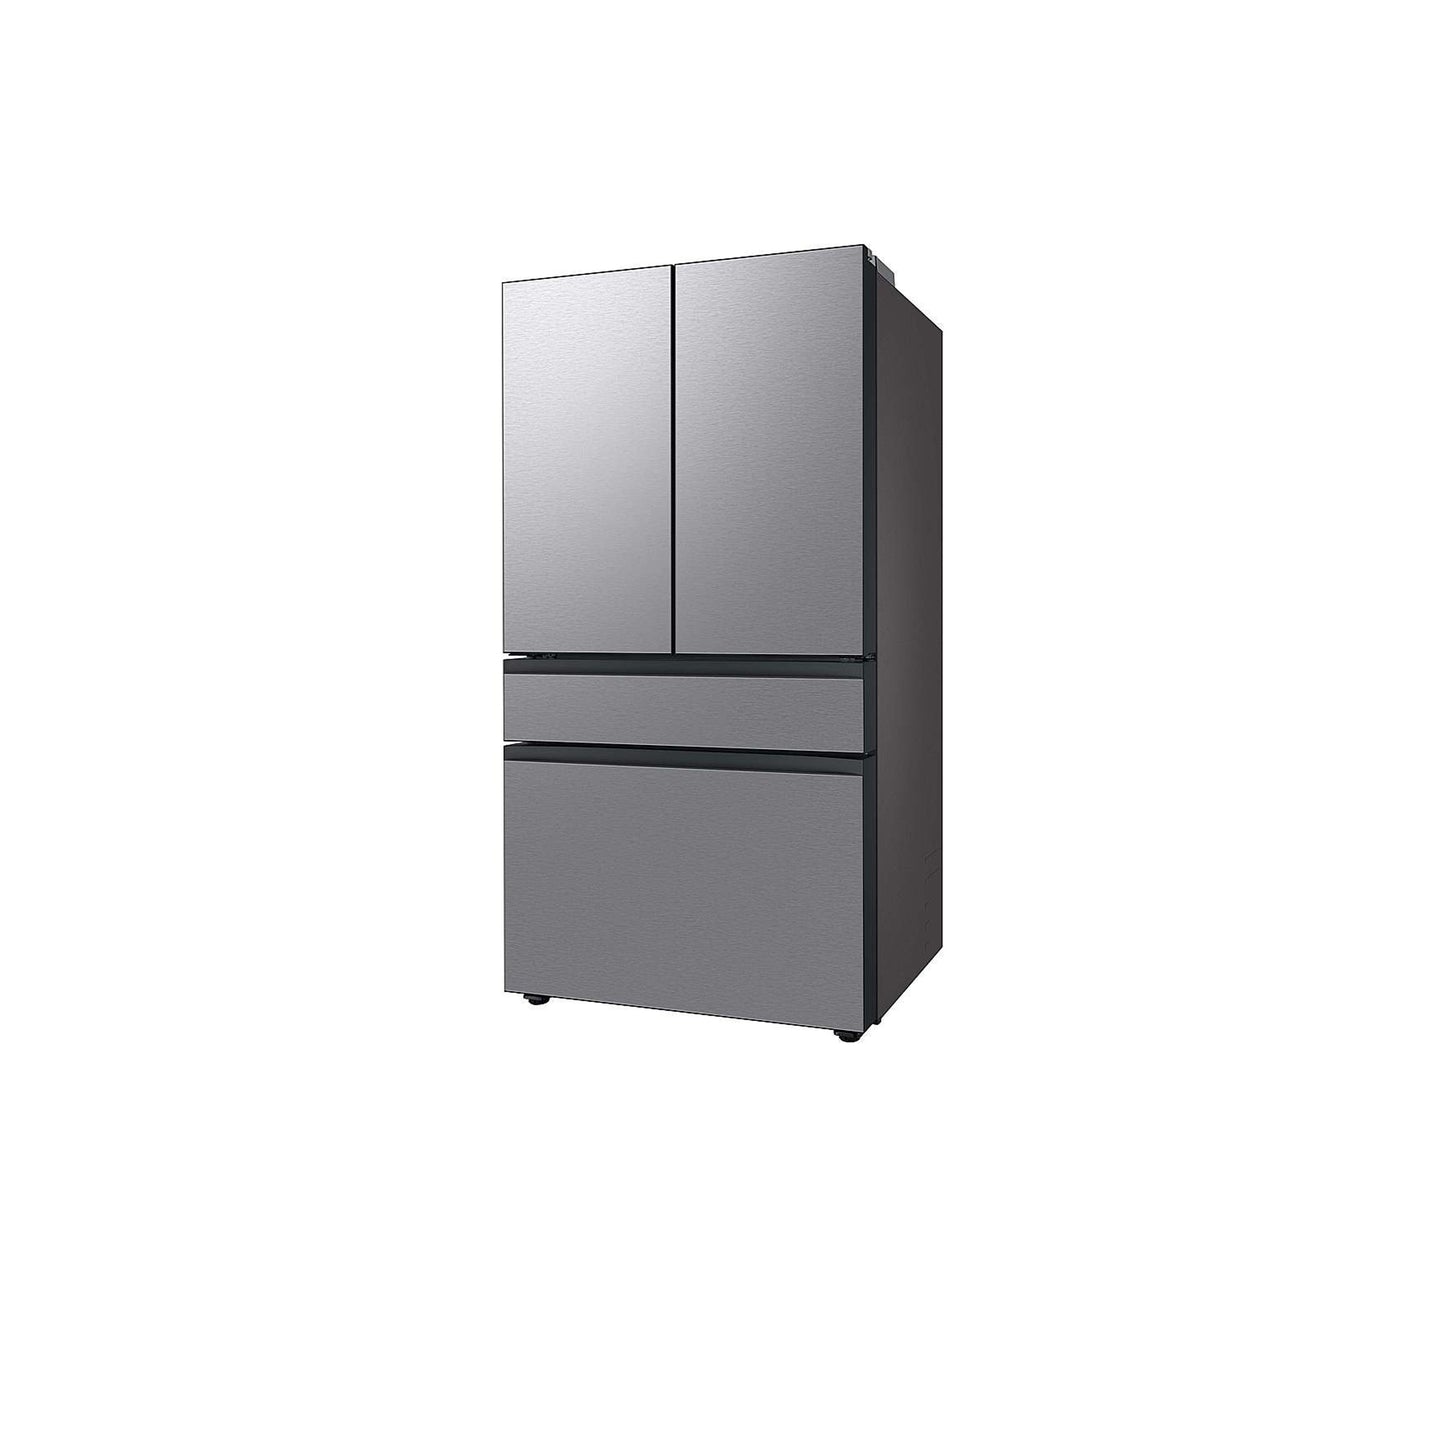 Bespoke 4-Door French Door Refrigerator (29 cu. ft.) with AutoFill Water Pitcher in Stainless Steel.